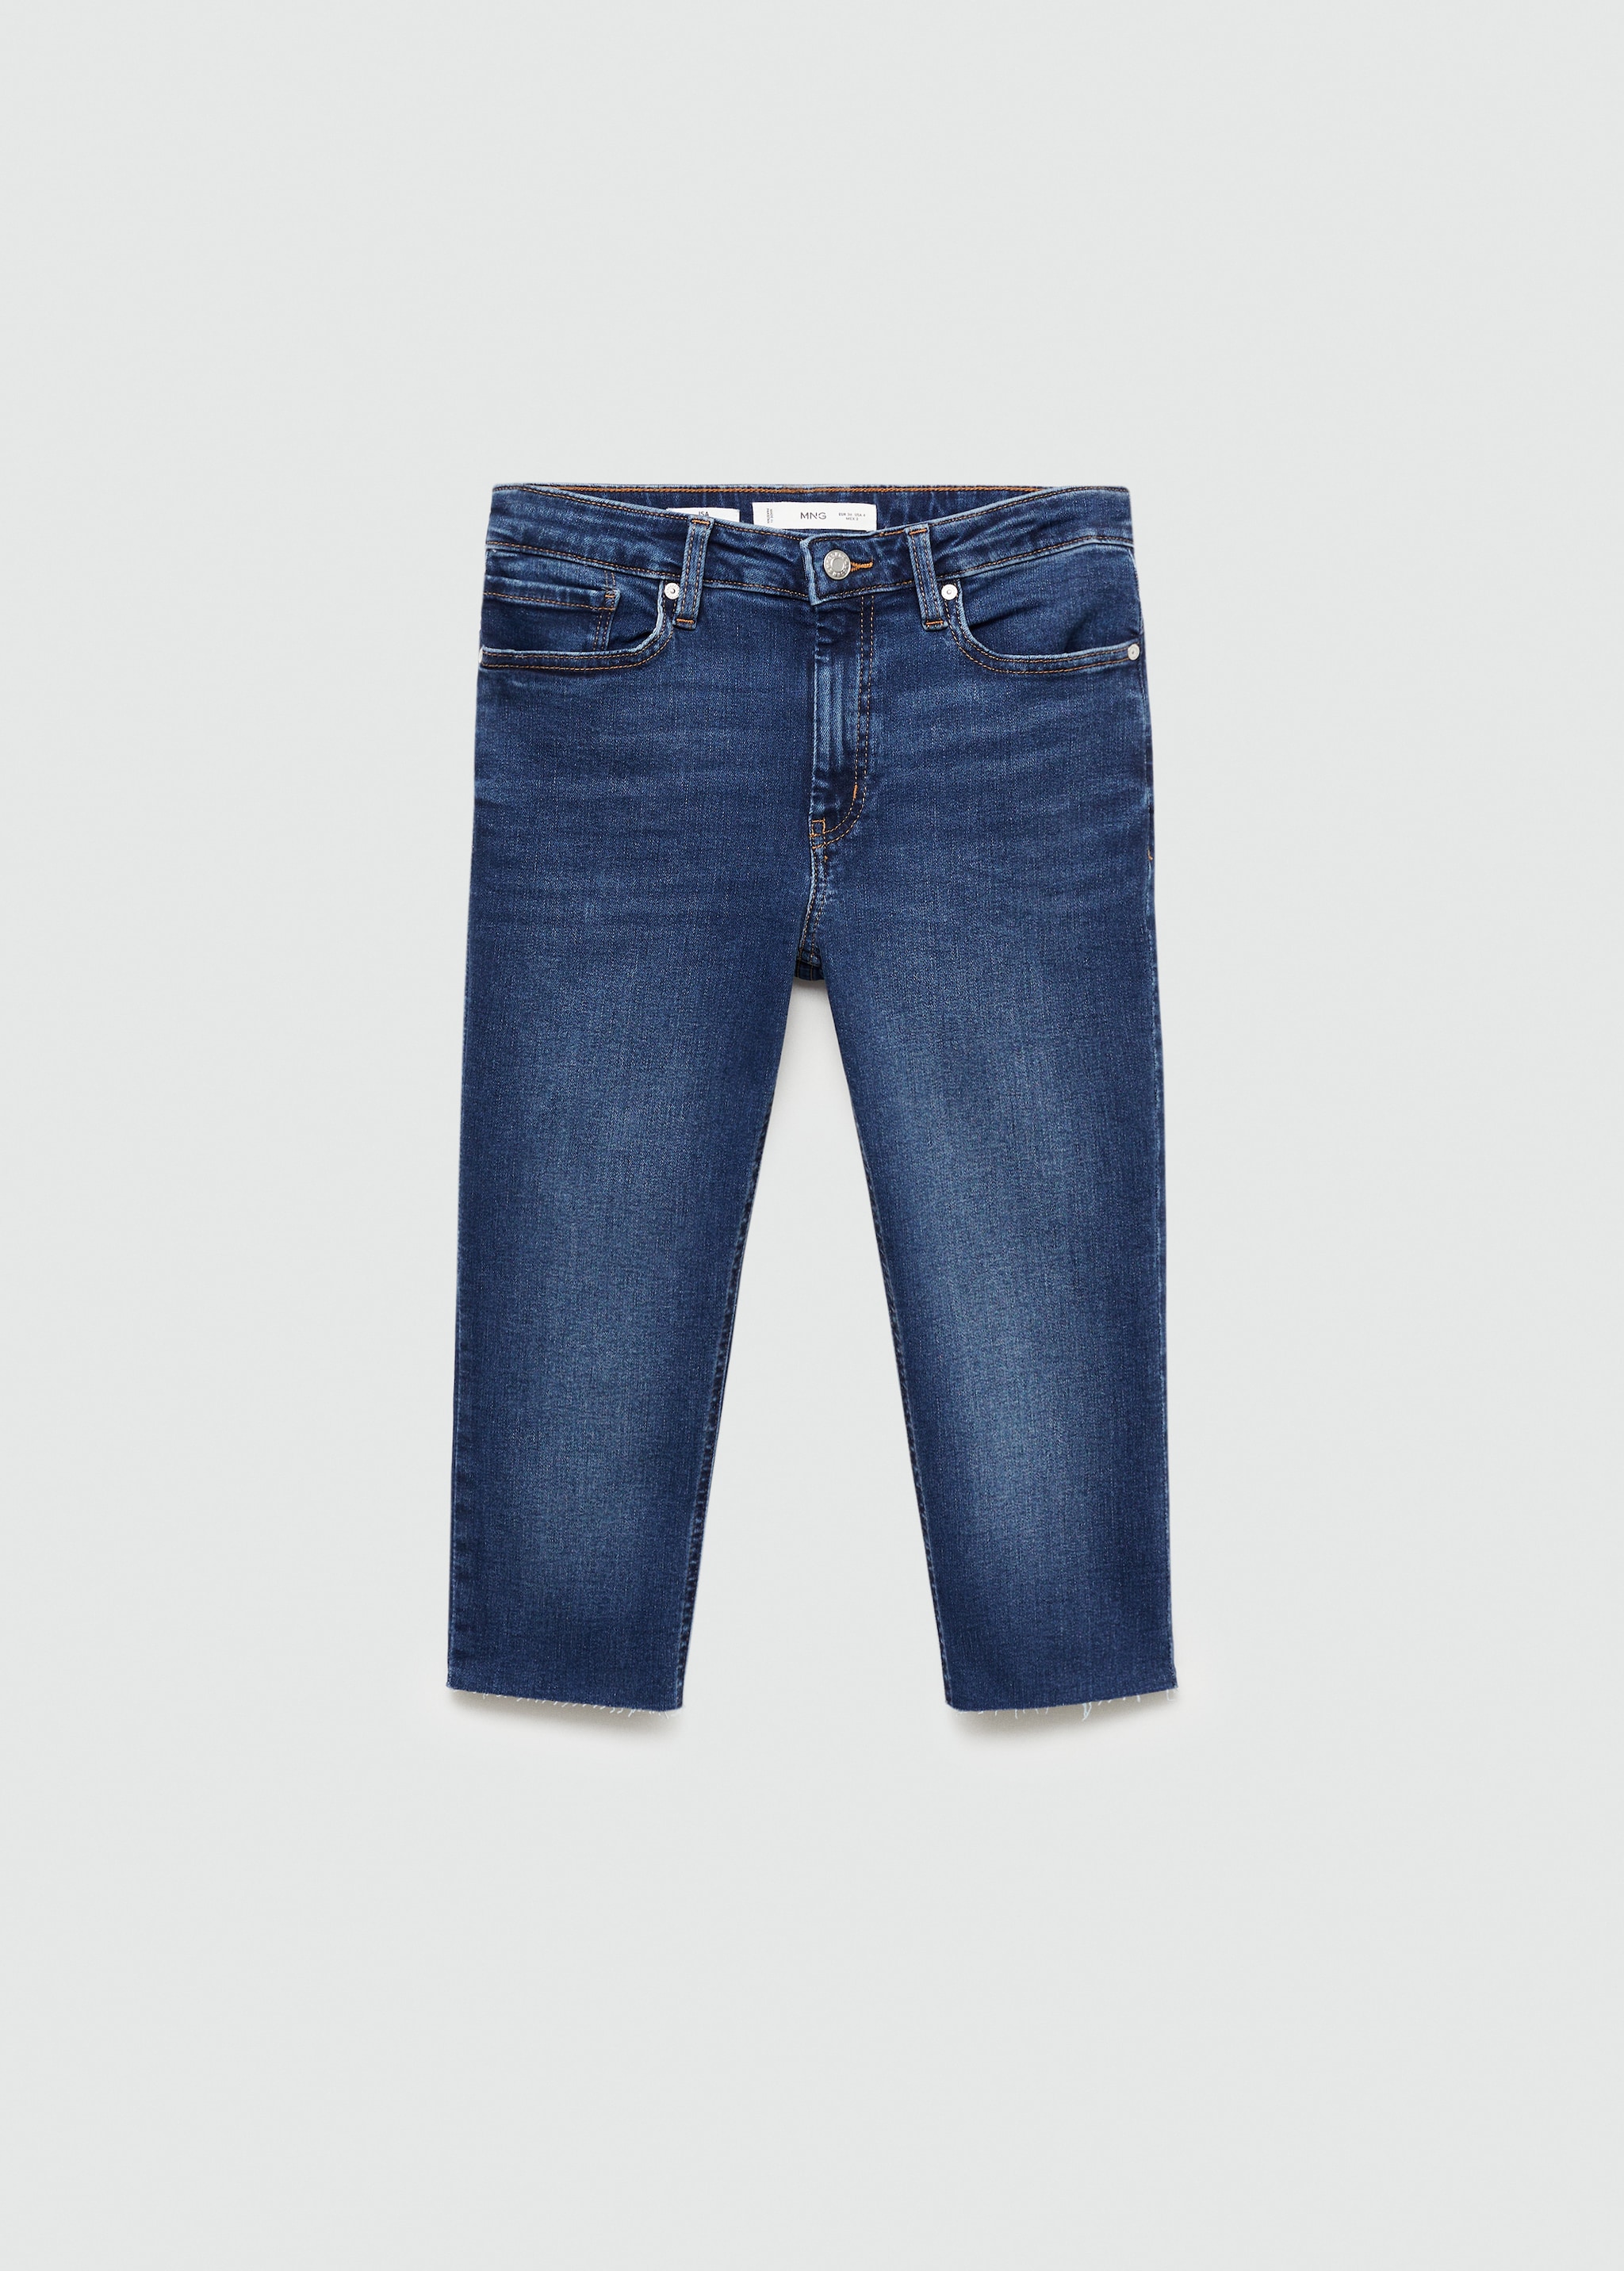 Capri slim-fit jeans - Article without model